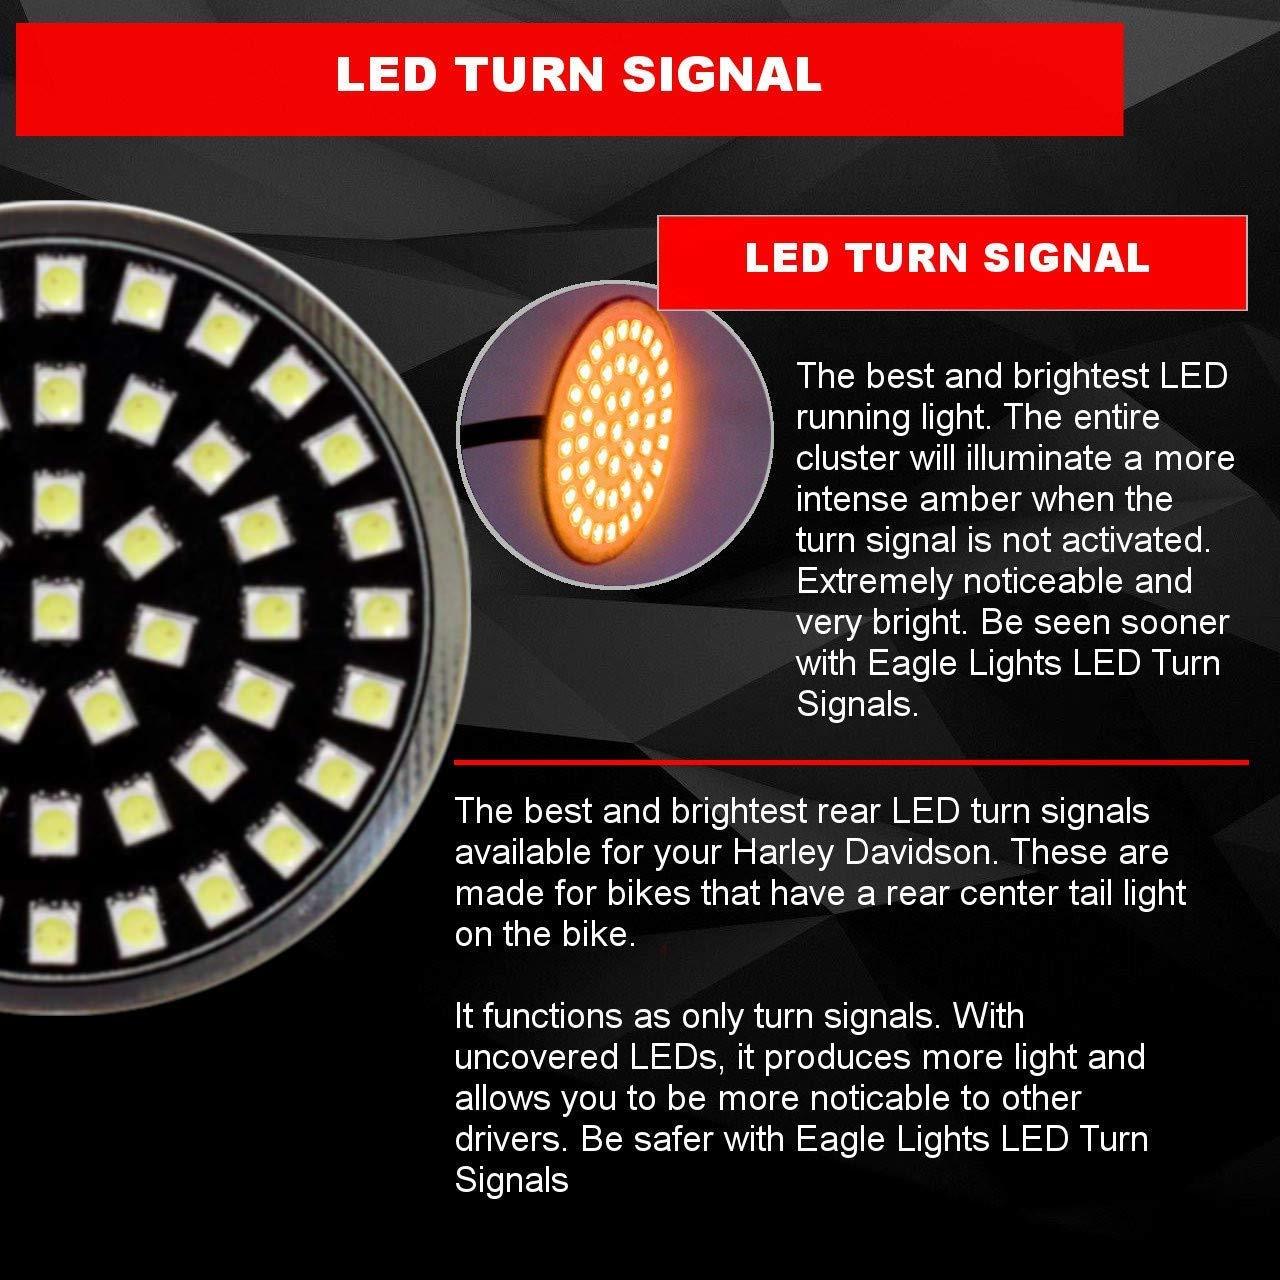 2” LED Front Turn Signals - Eagle Lights Midnight Edition Generation II Amber LED Premium Rear Turn Signals - 1156 Base